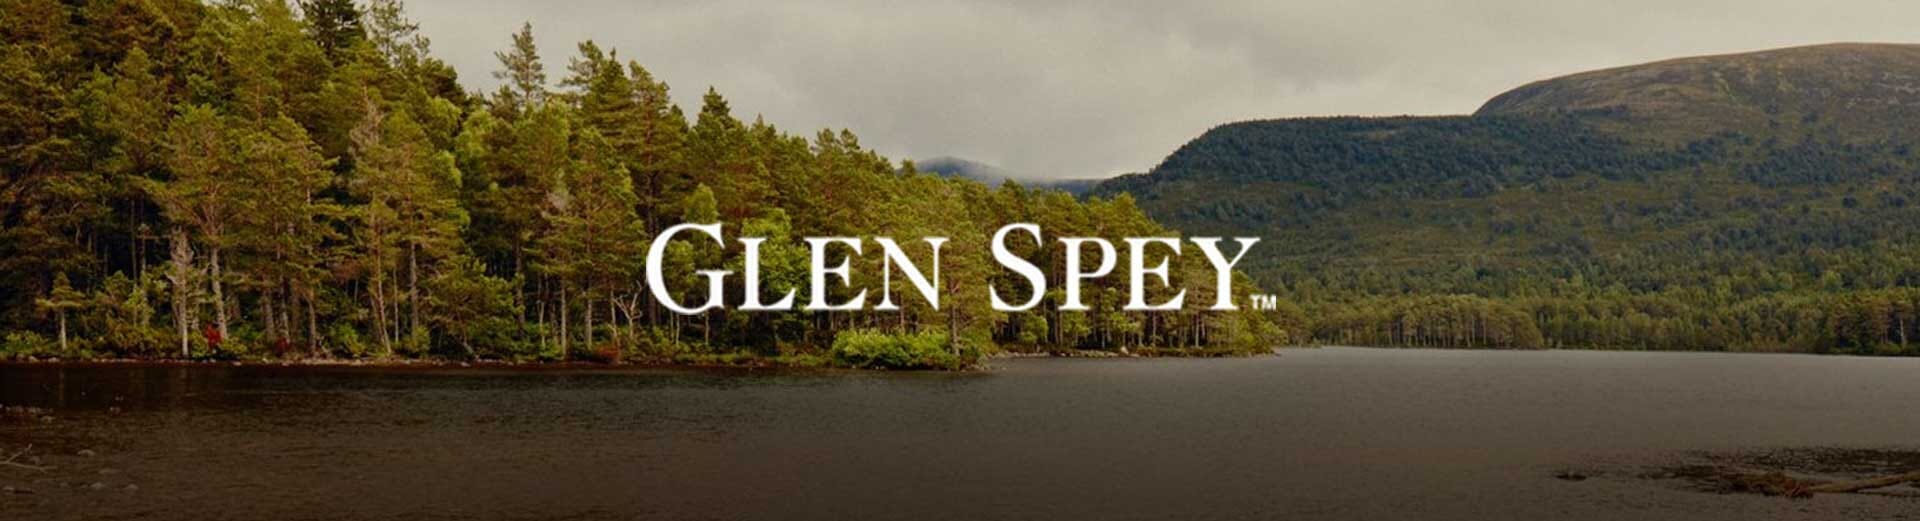 Glen Spey Banner